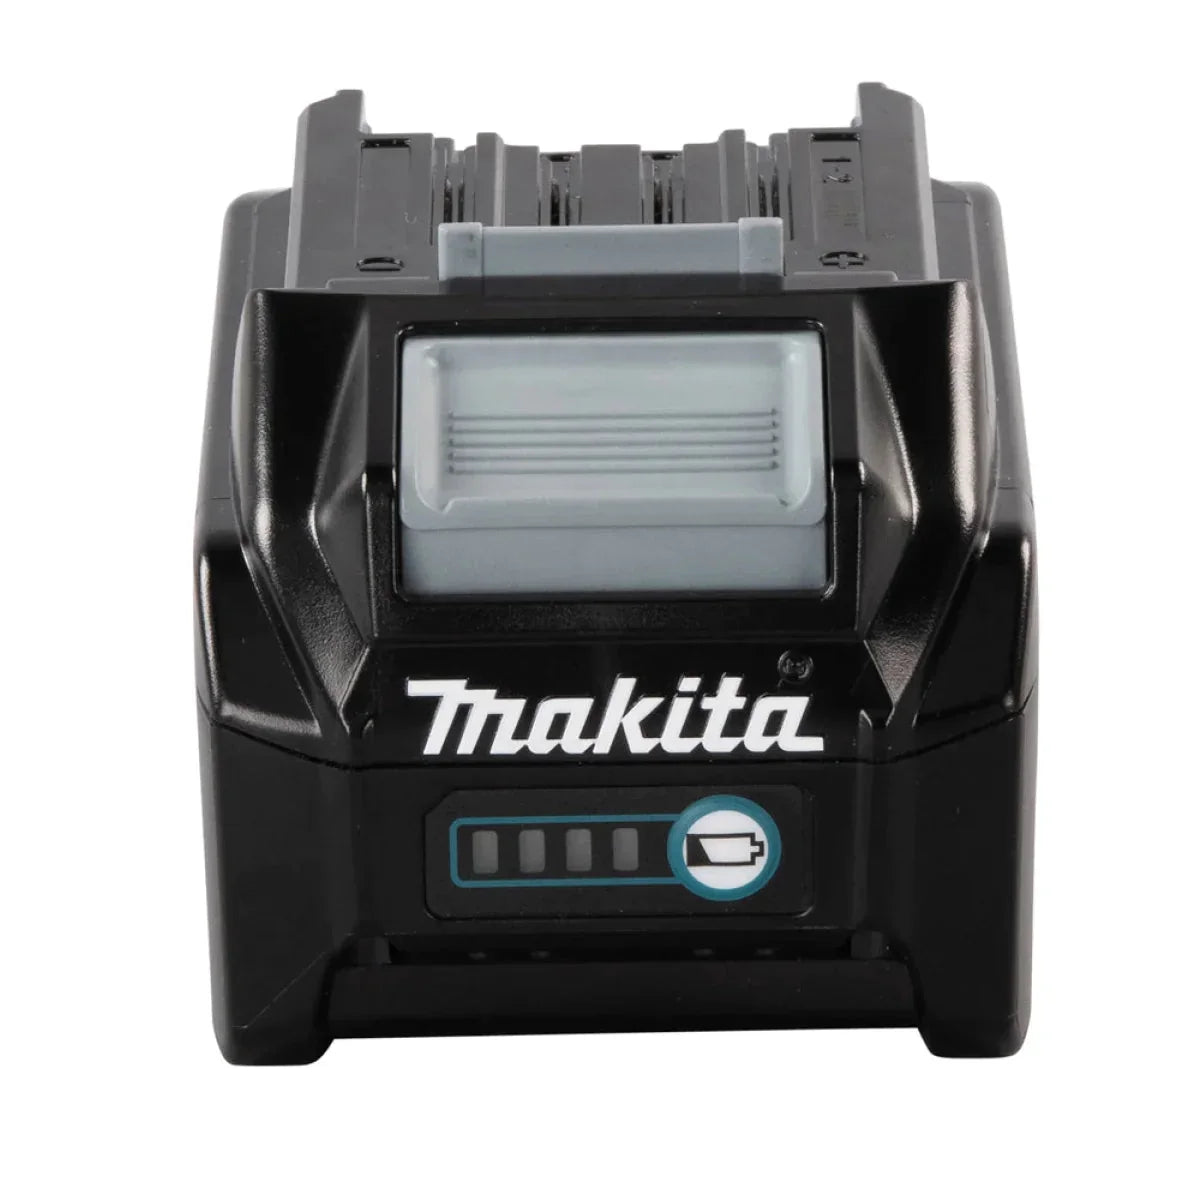 Makita-BL4040 40V - 4.0Ah-Werkzeug-Akku 40V-Masori.de